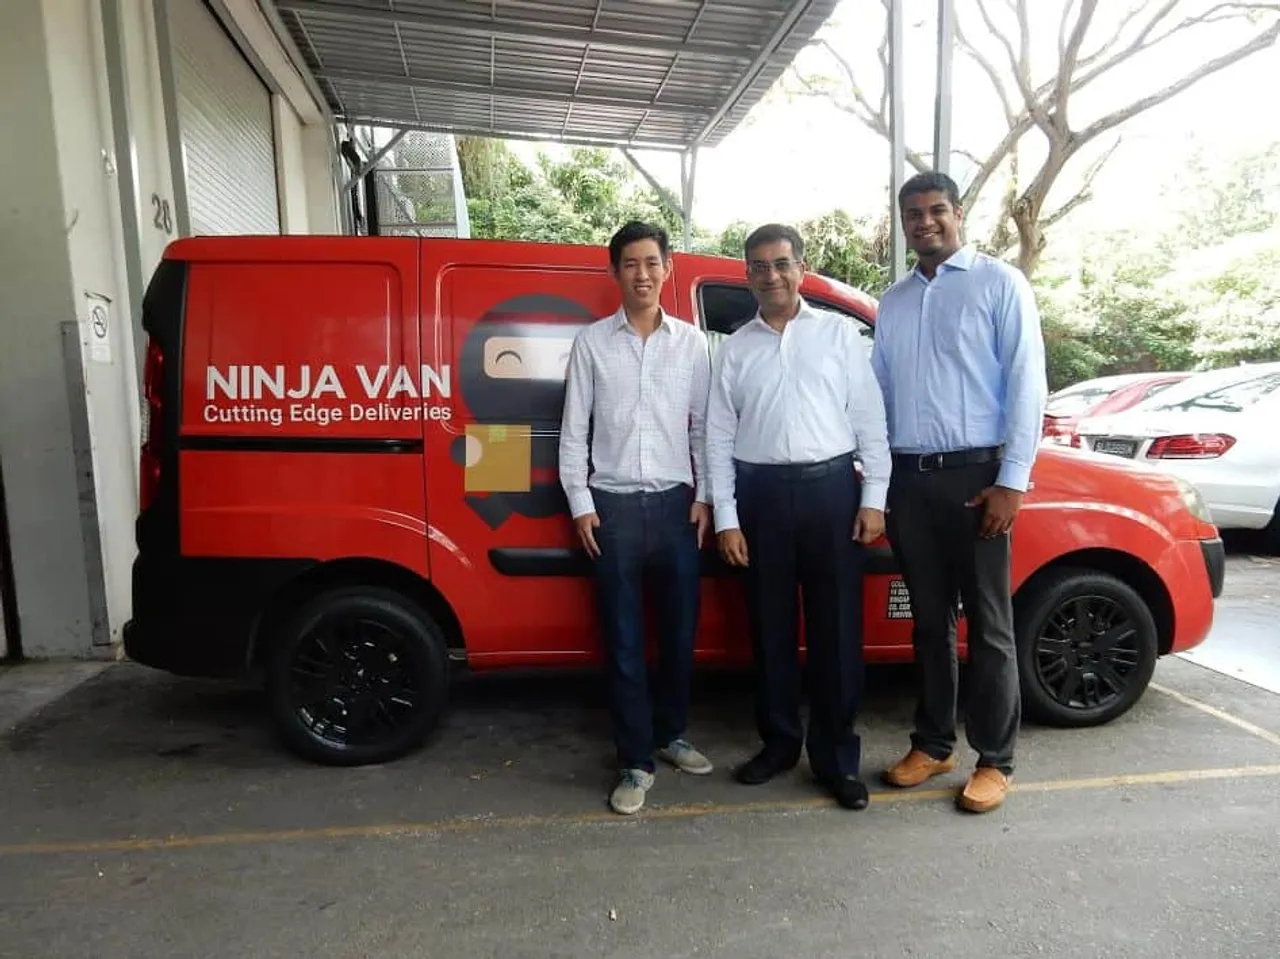 GreyOrange deploys first sortation system at Ninja Van